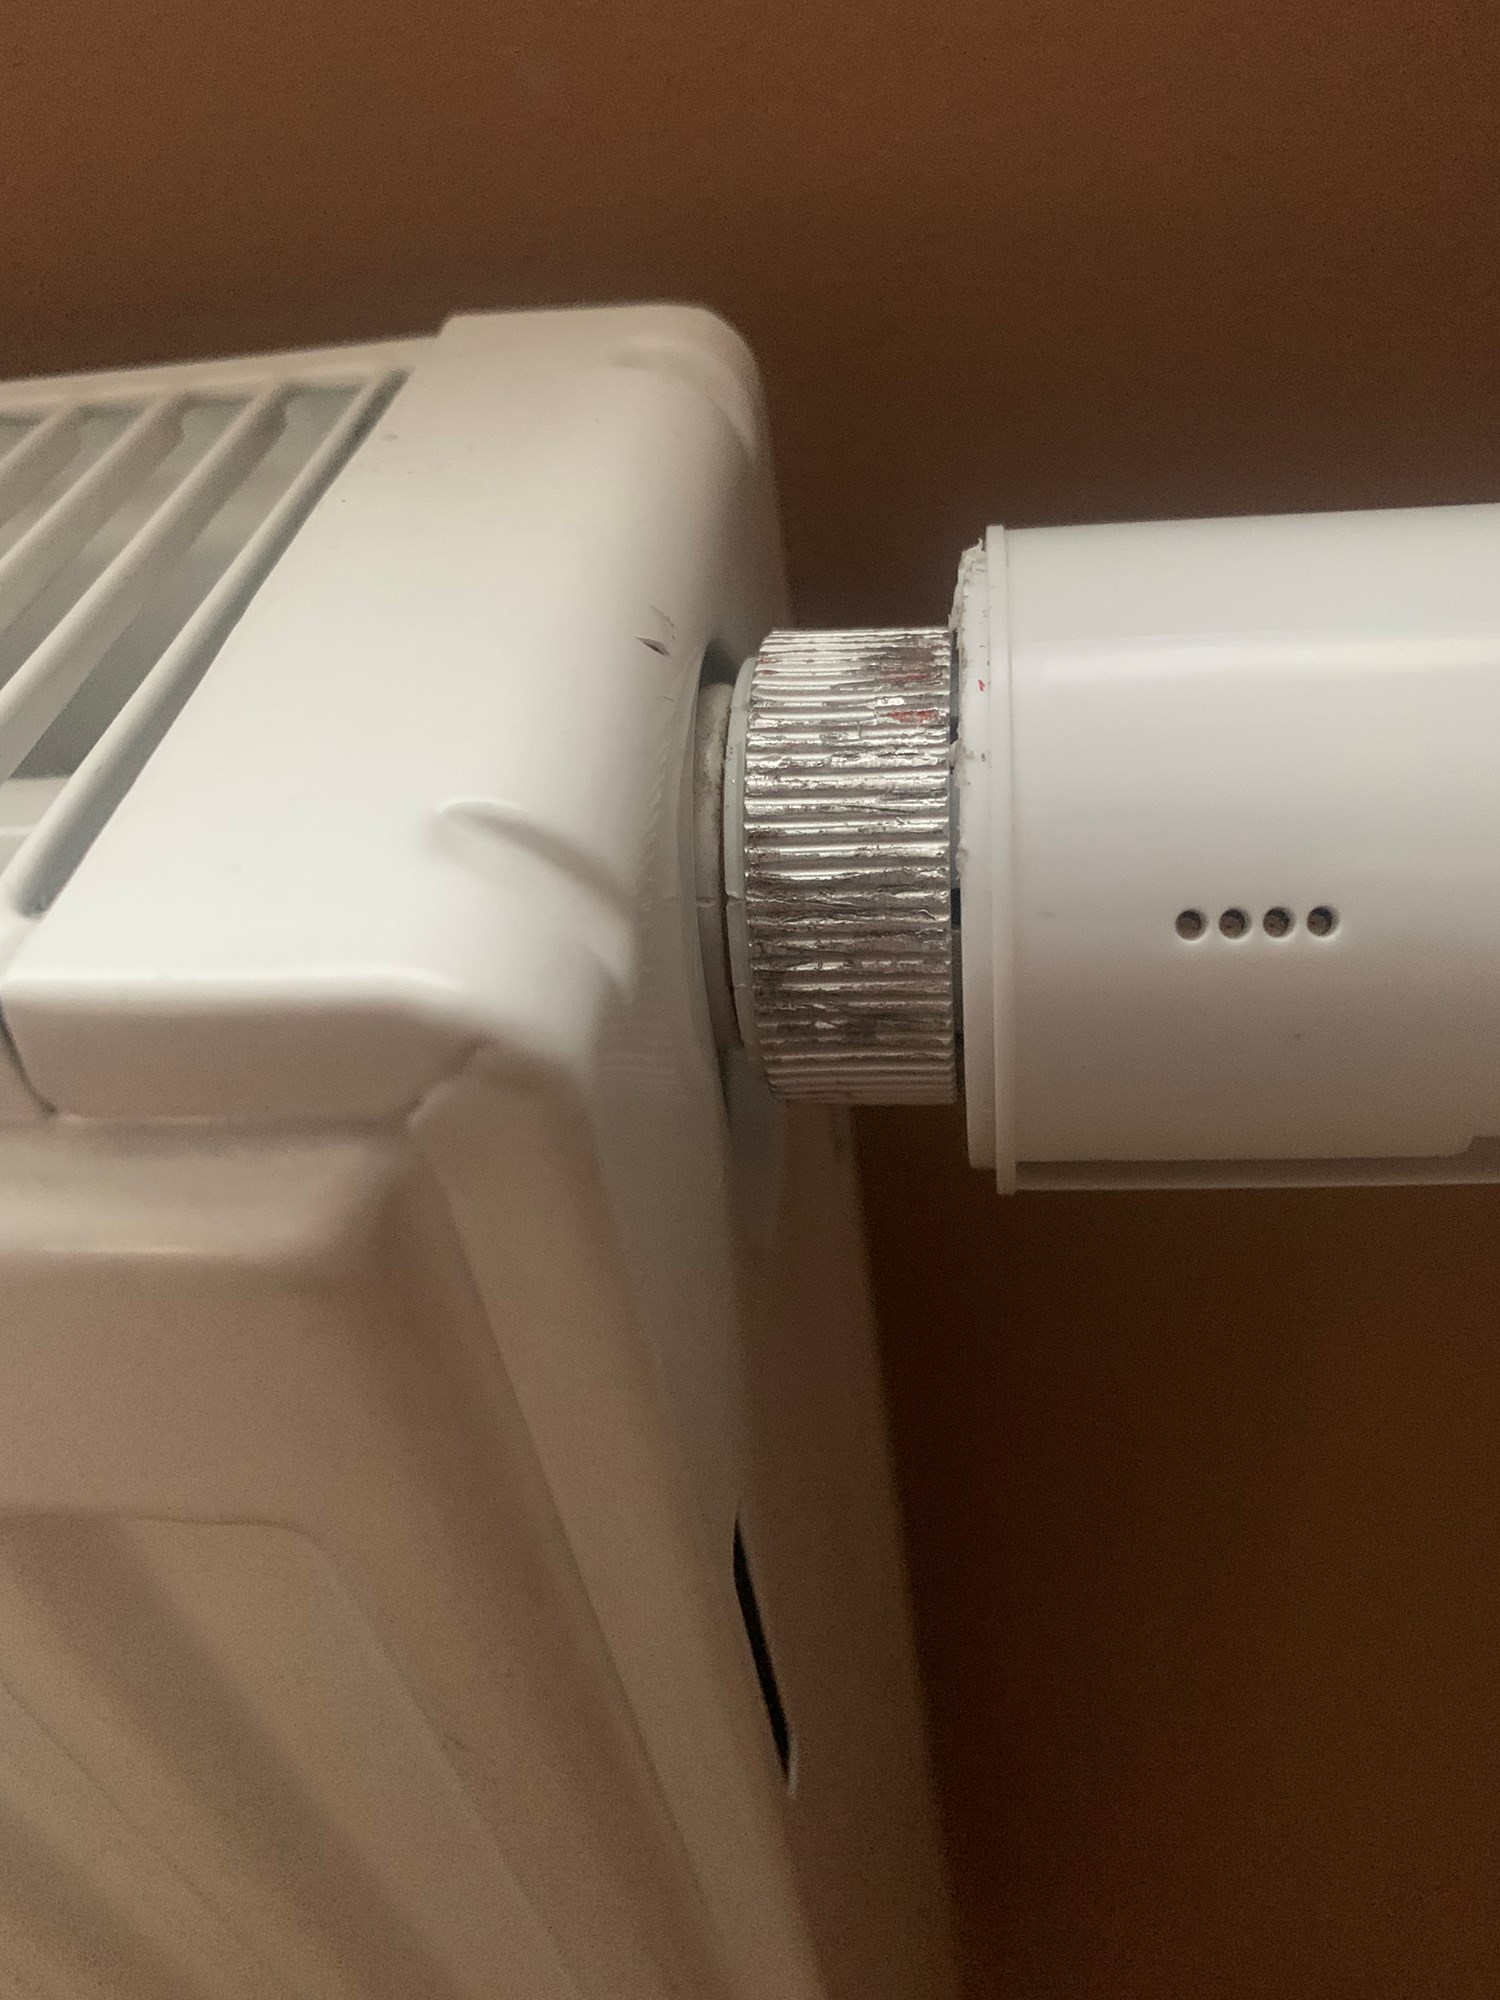 Hvordan demontere netatmo termostathode fra radiator? - F355045A-B207-4A05-8568-E16A2F200027.jpeg - Fiskenissen